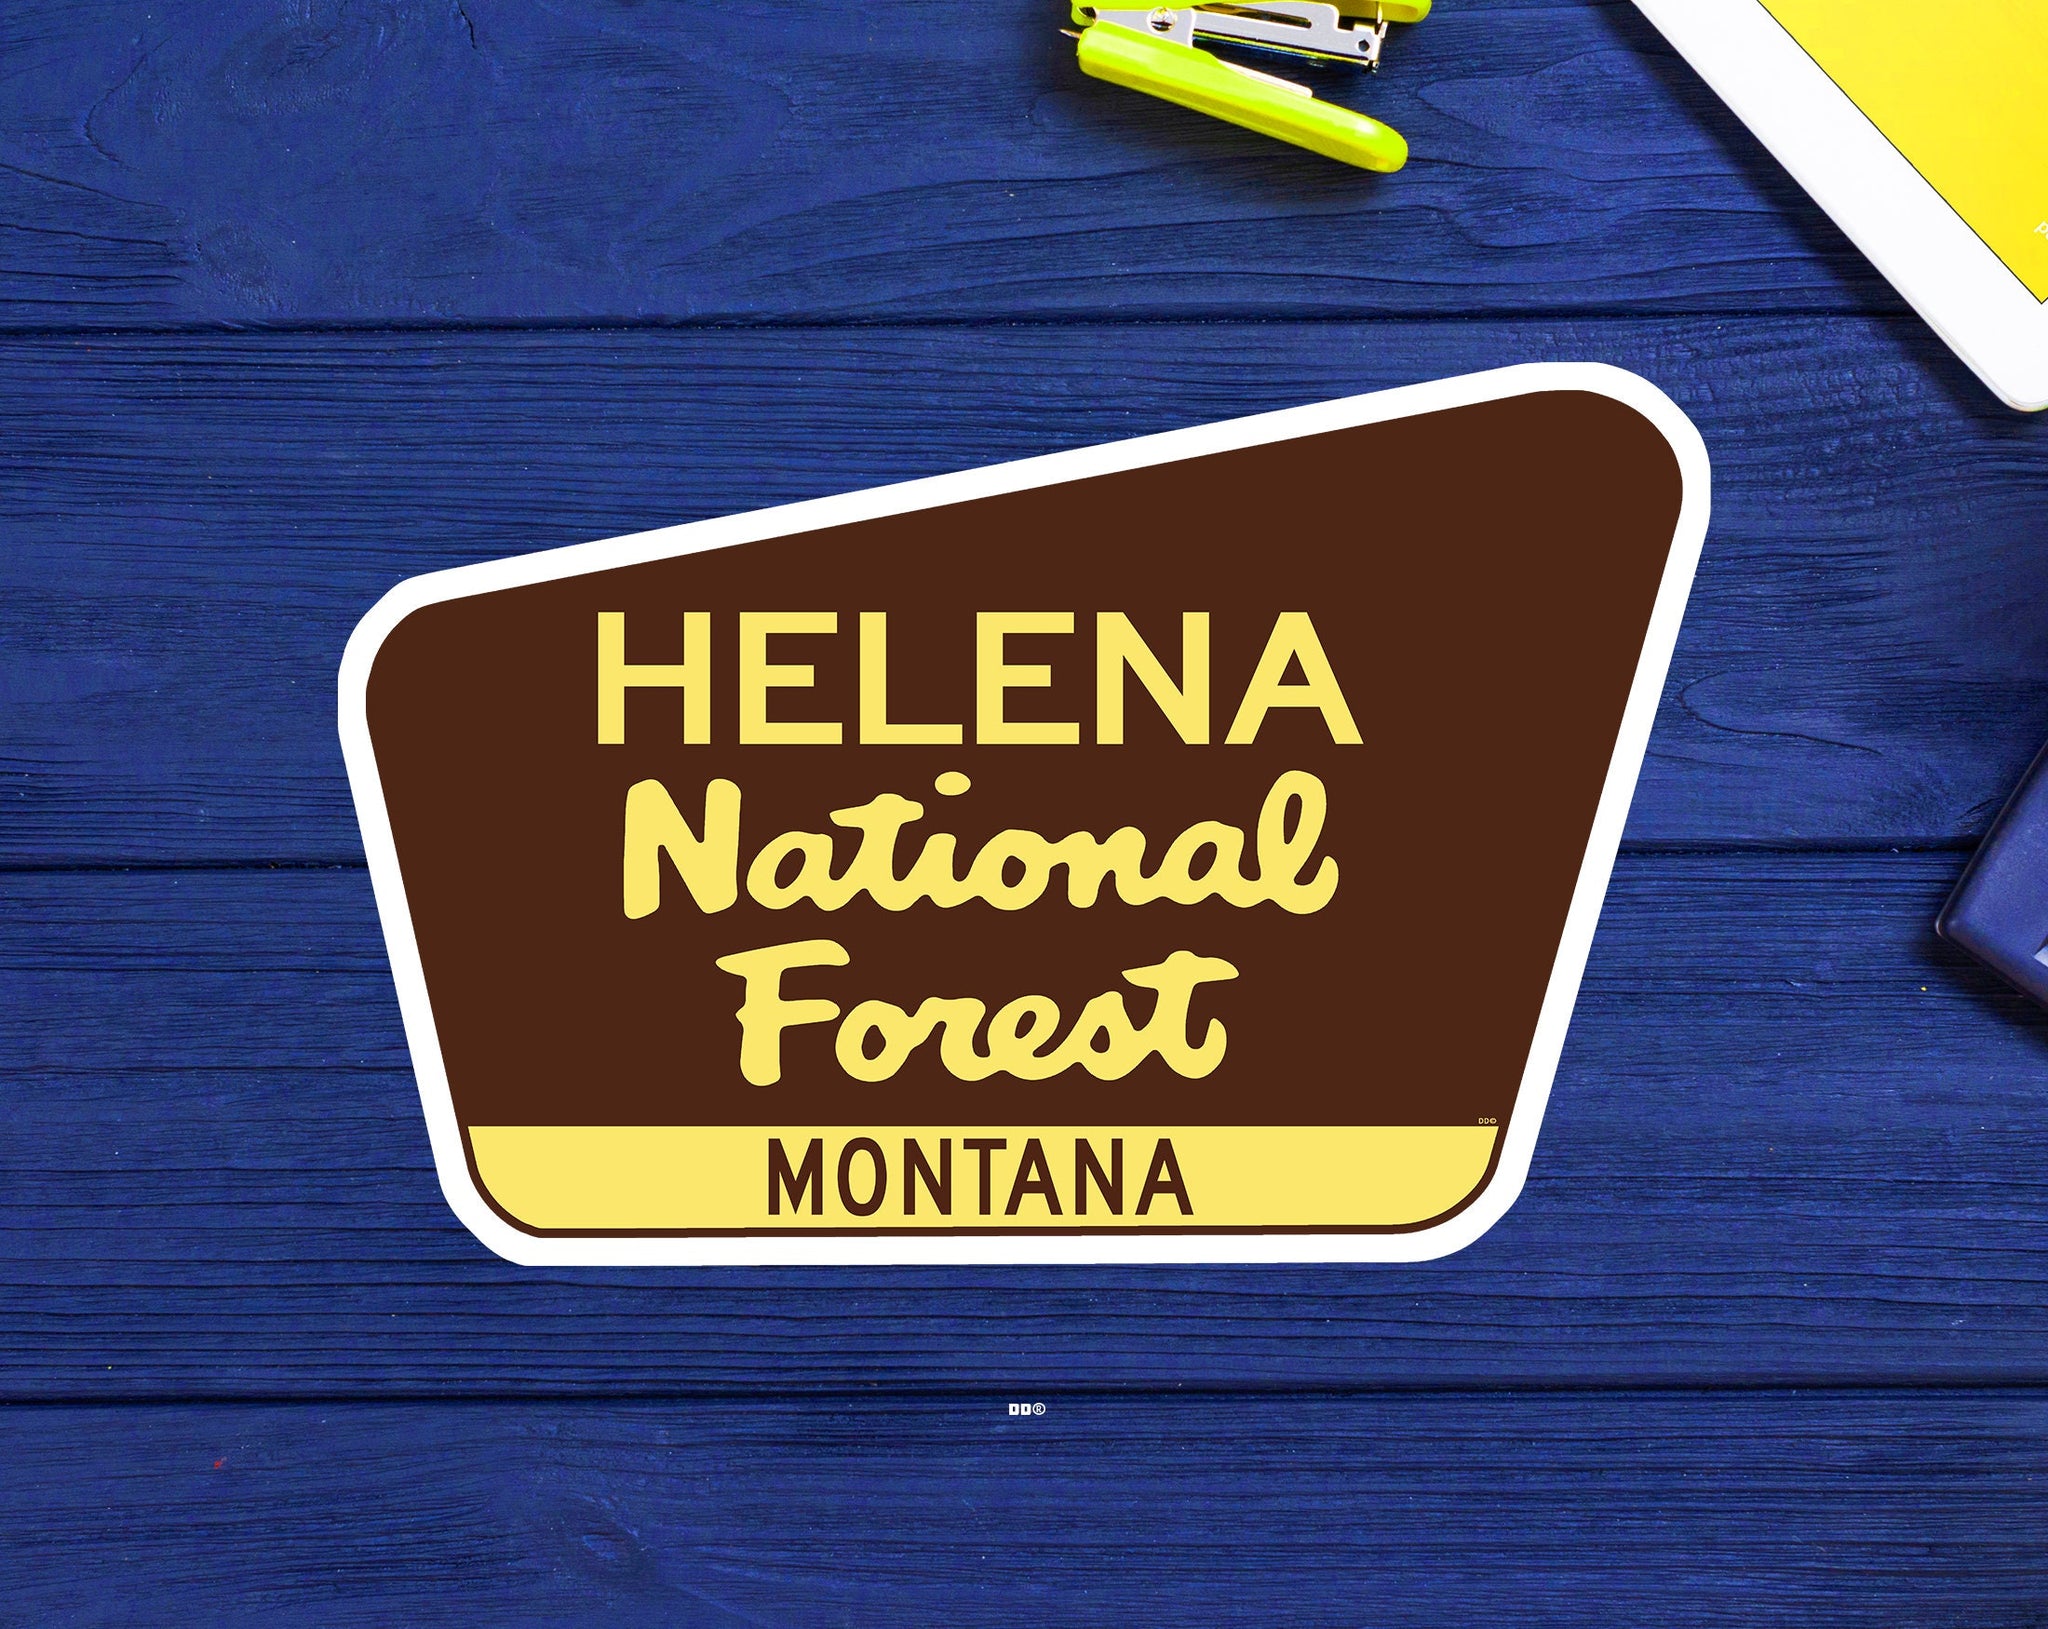 Helena National Forest Decal Sticker 3.75" x 2.5" Montana Park Vinyl